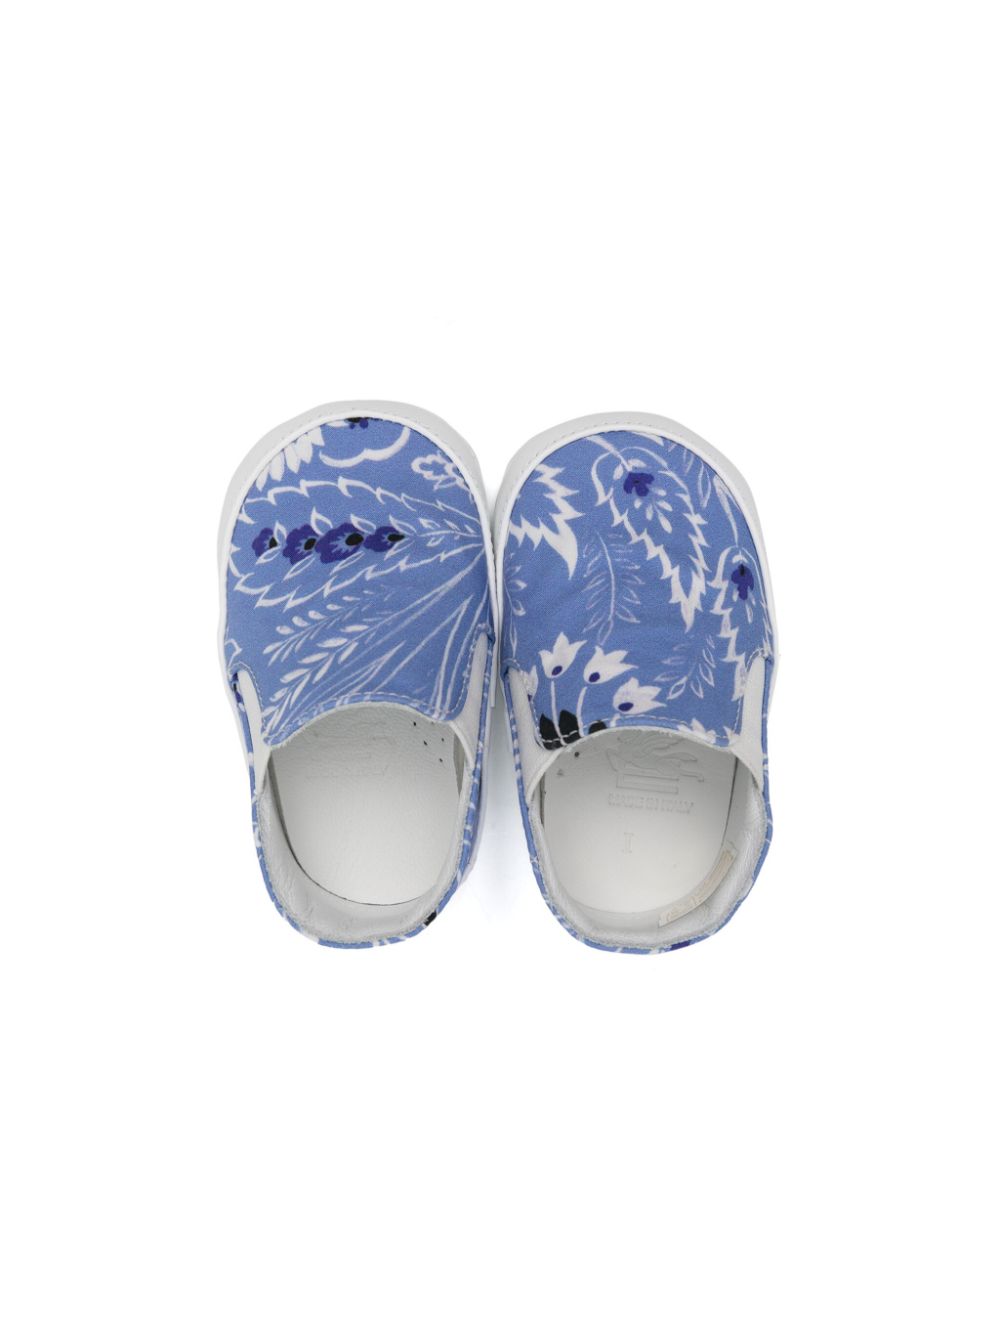 Sneakers neonato blu/bianco